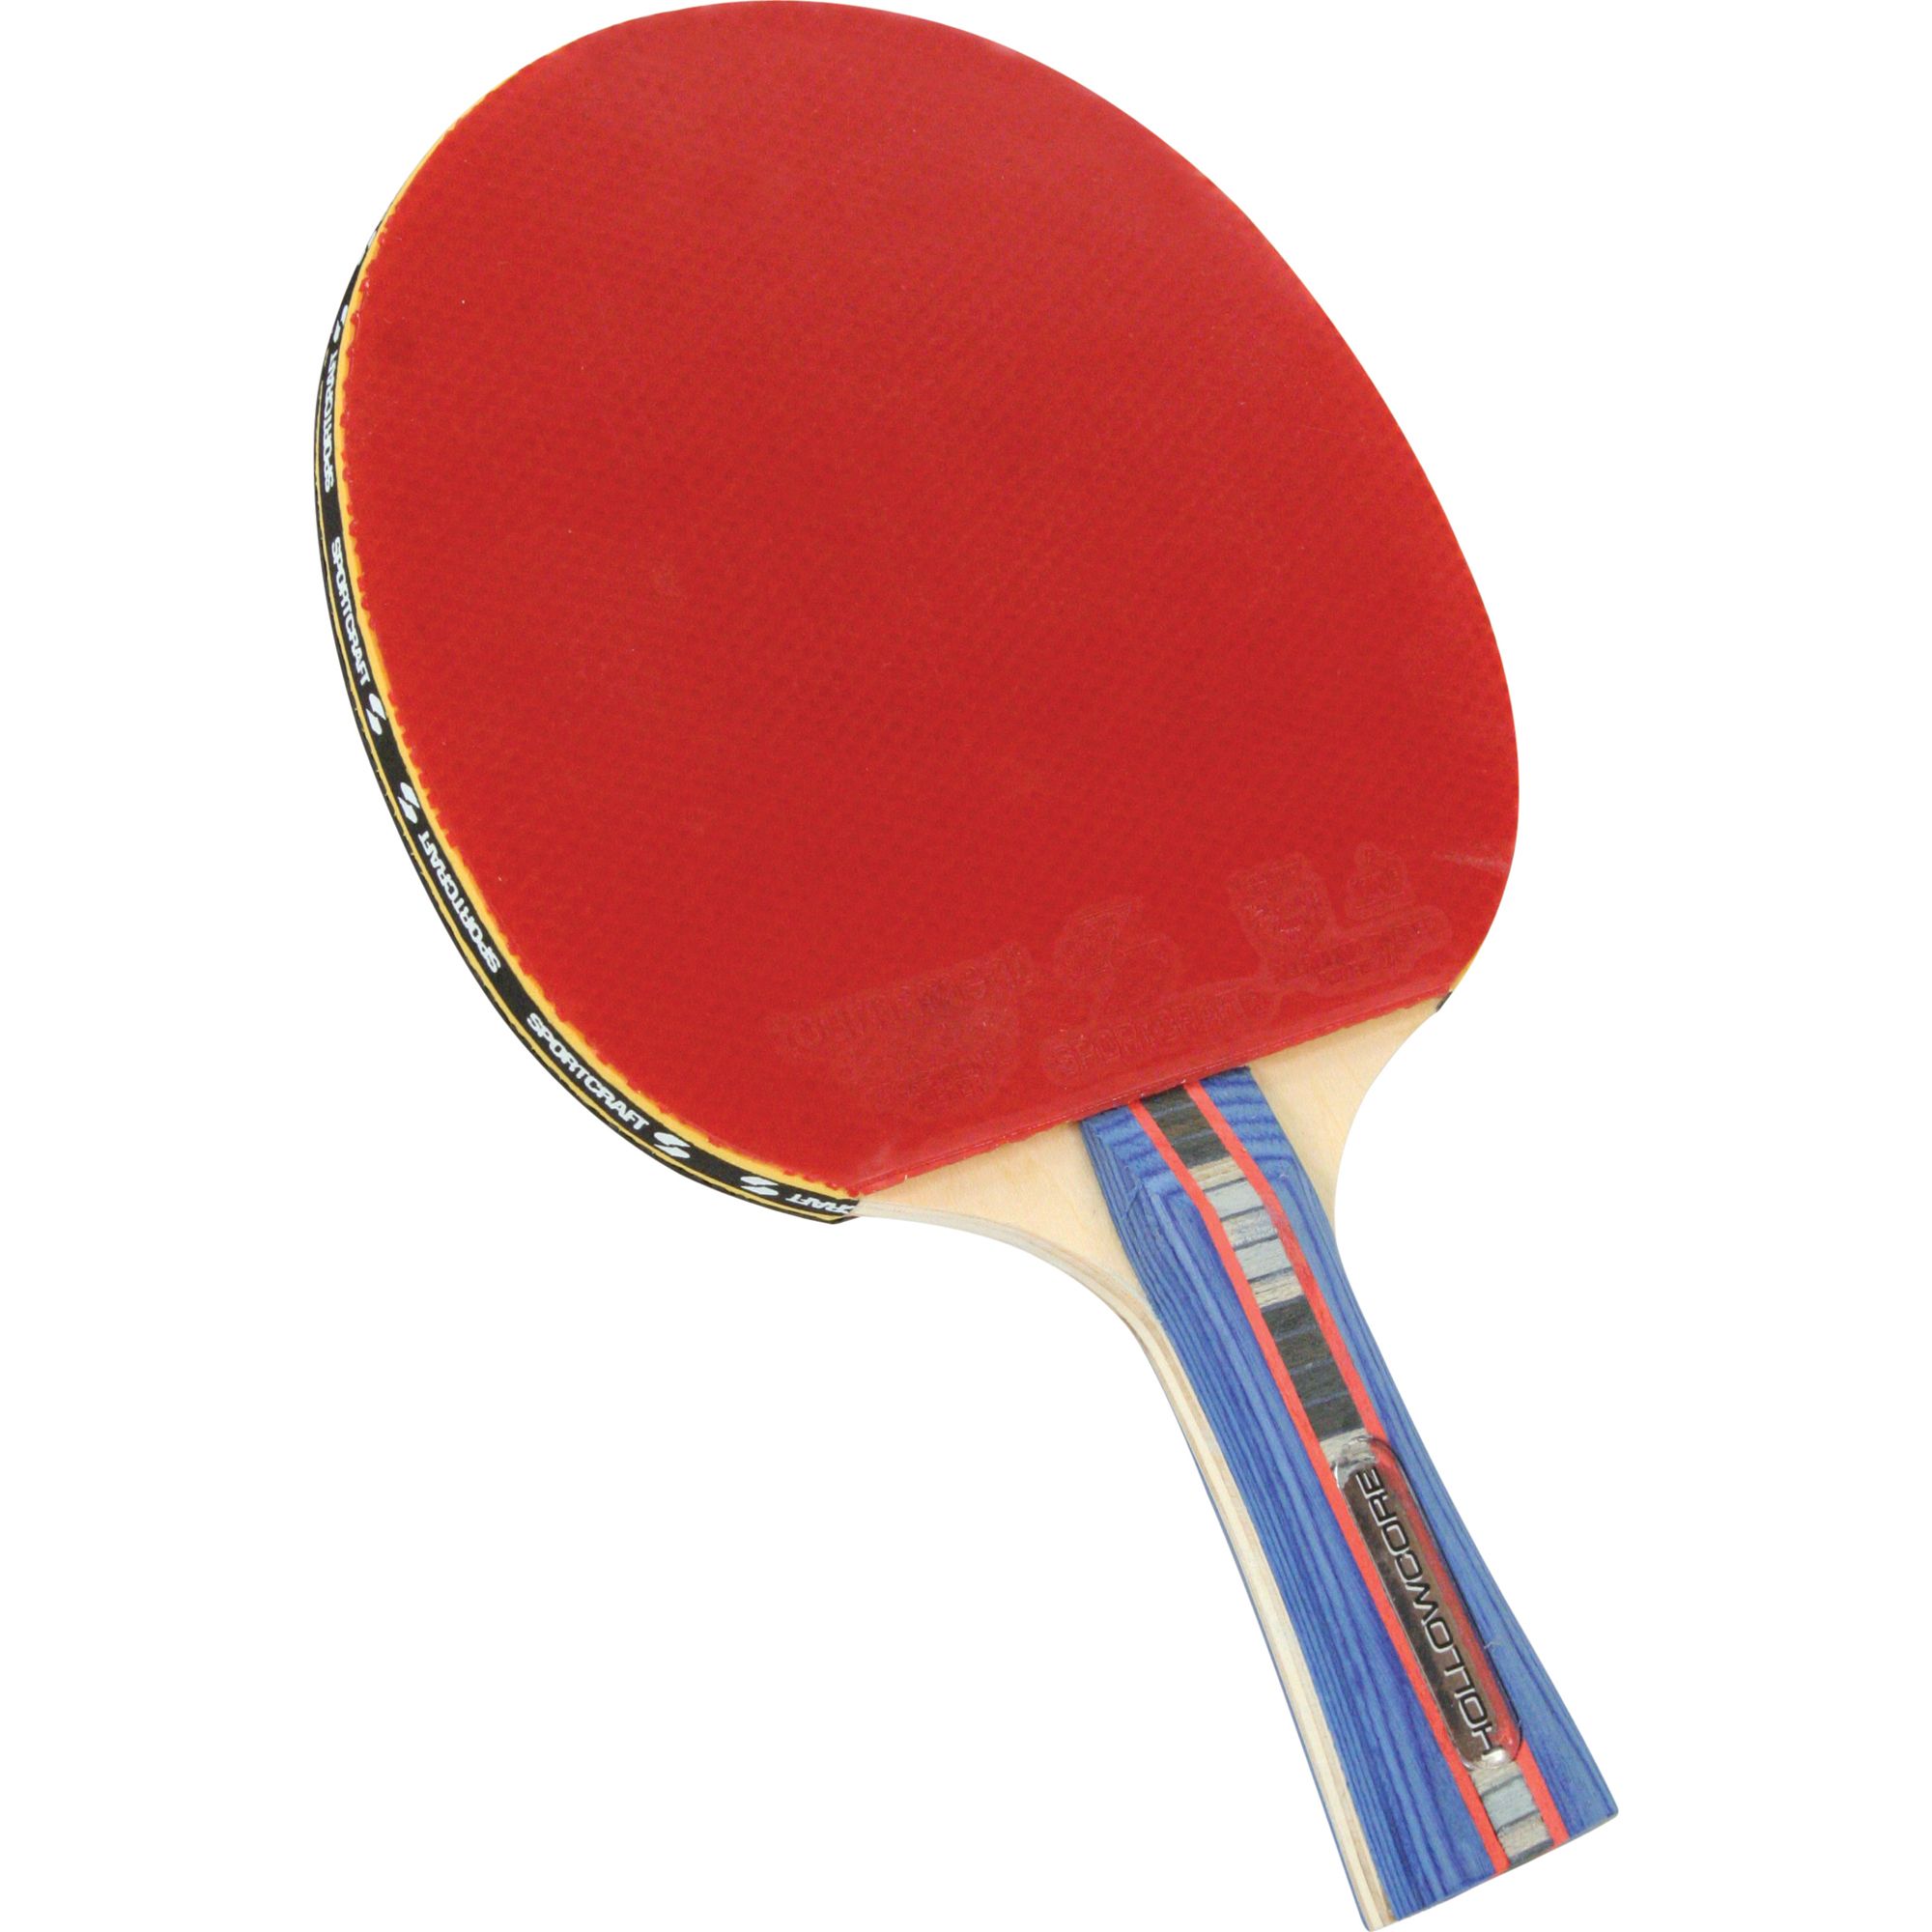 2 Star Ping Pong Racket